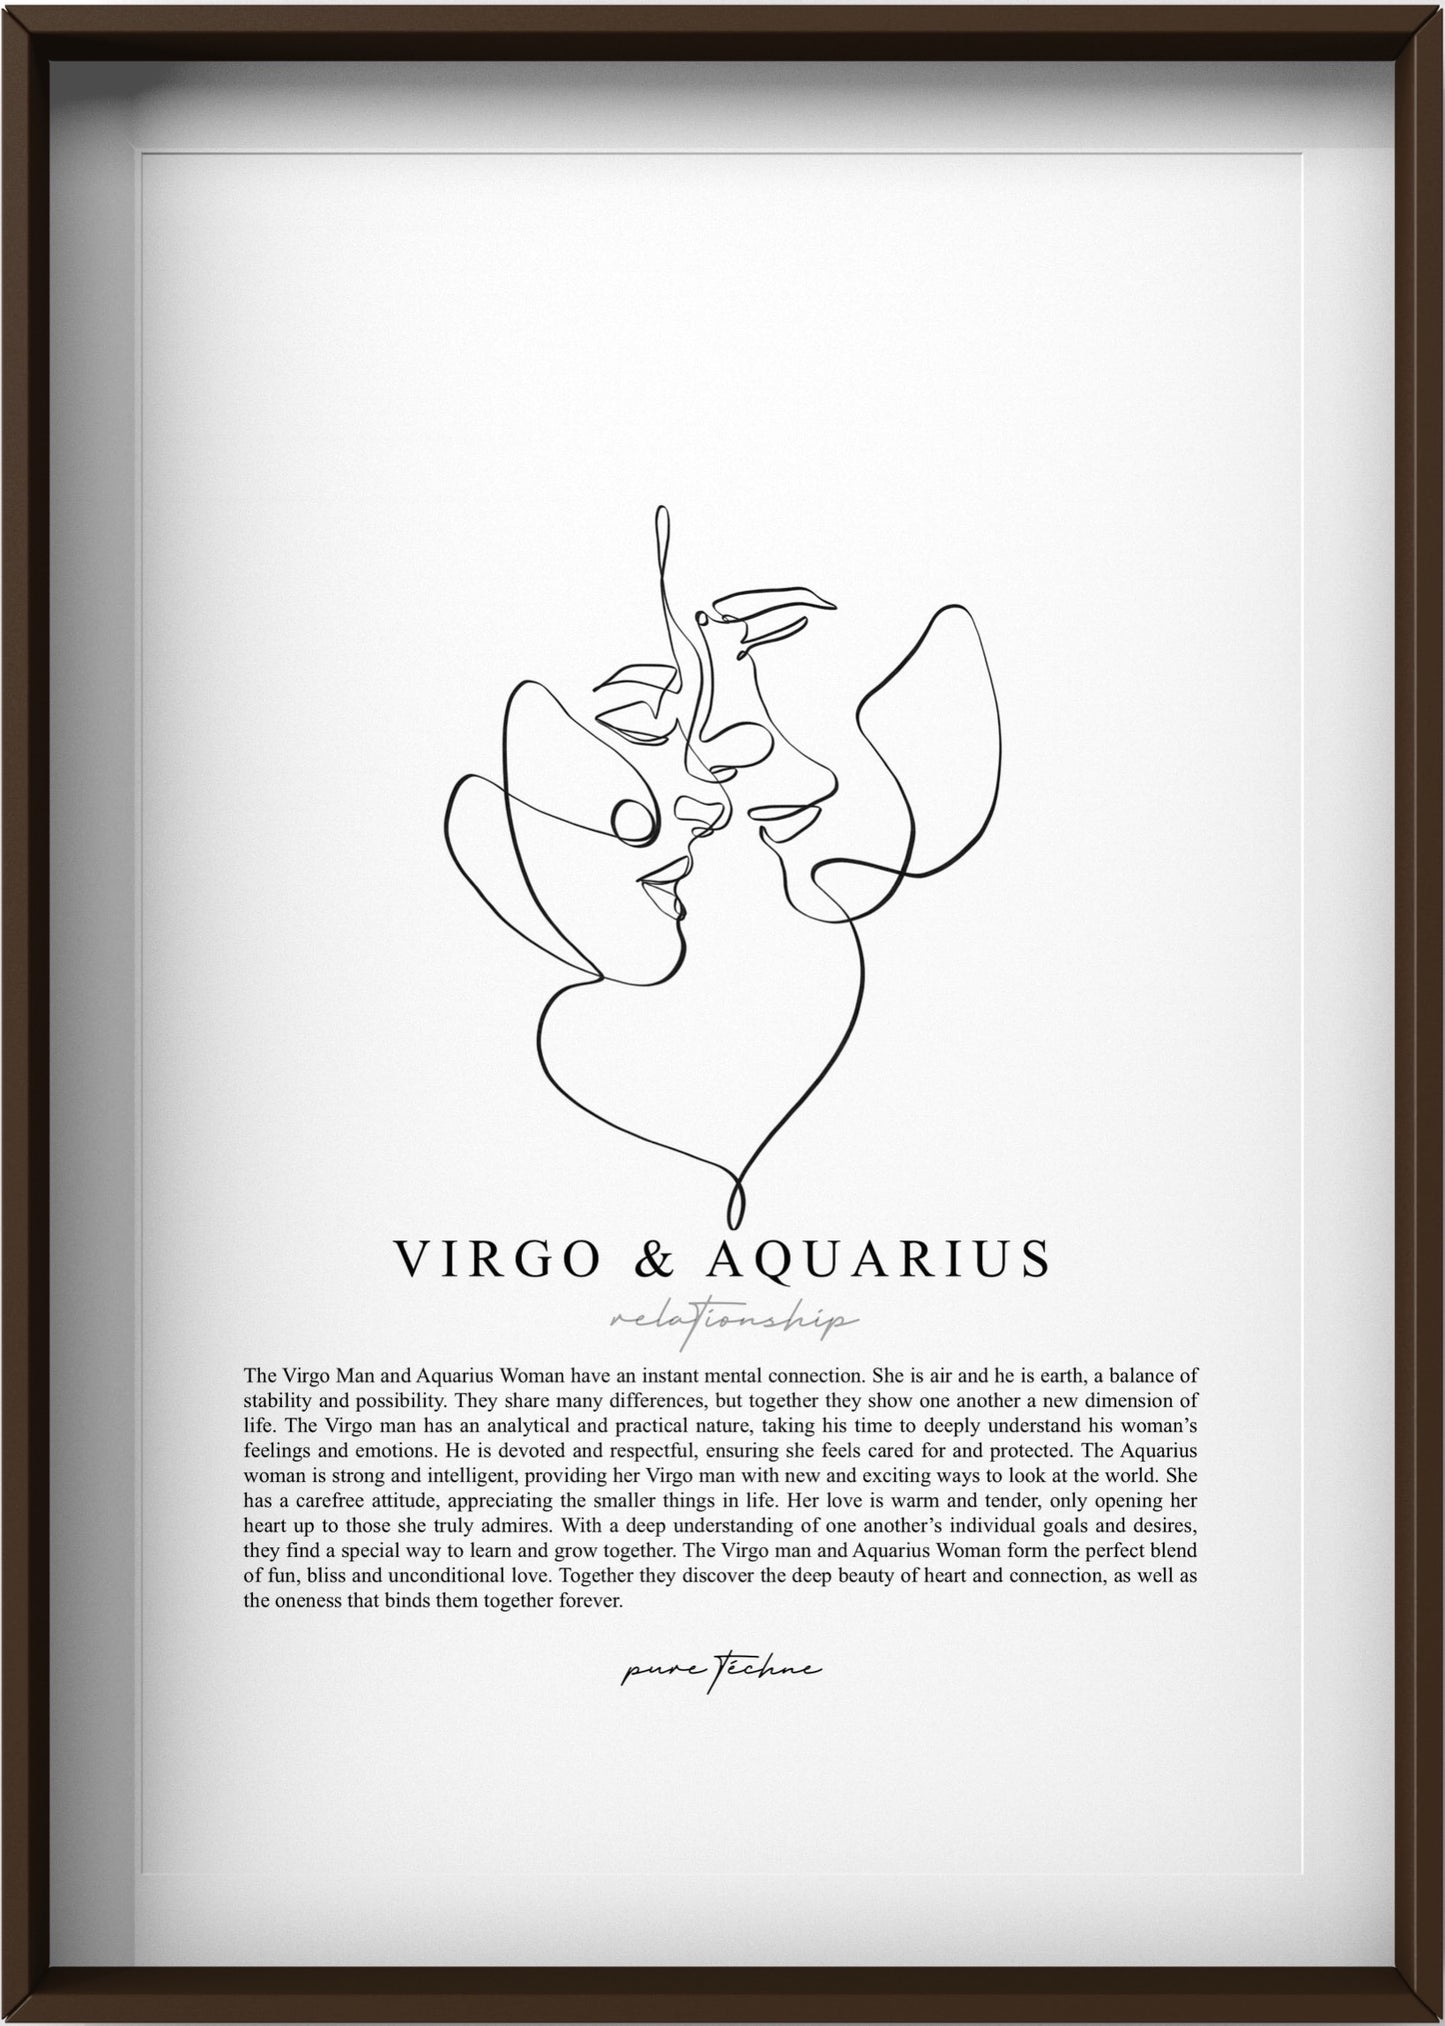 Virgo Man & Aquarius Woman